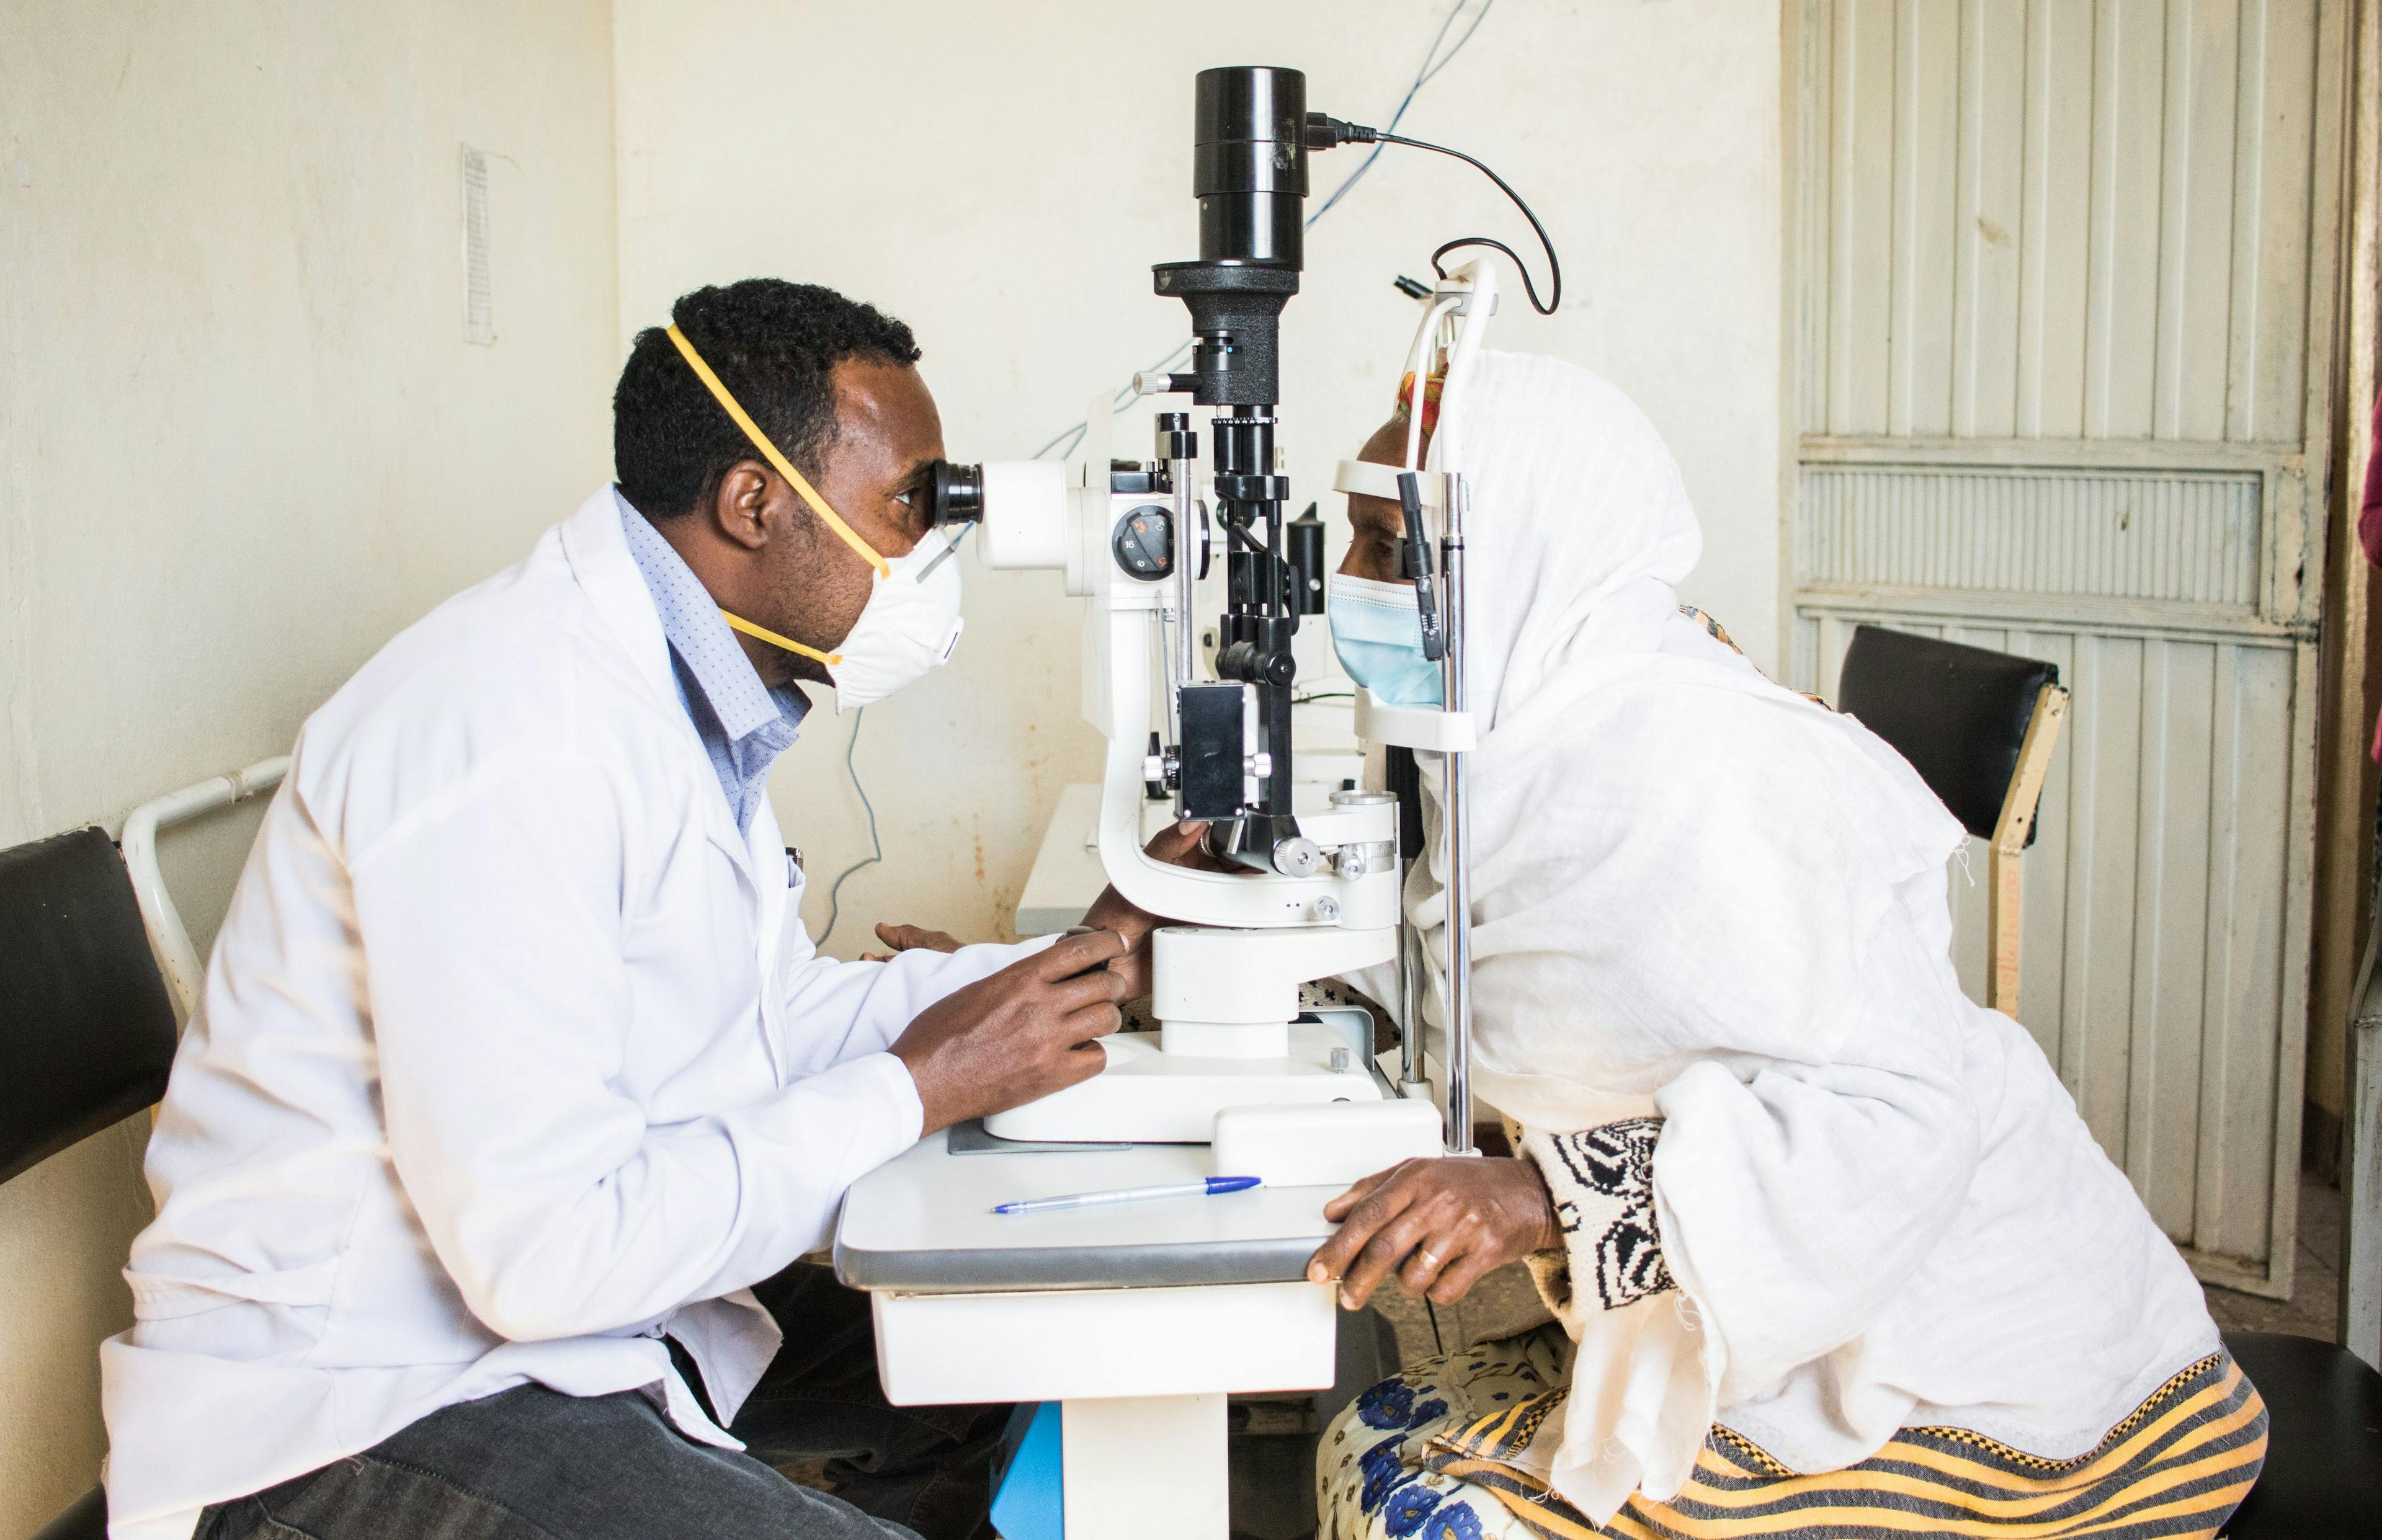 Orbis workers provide eyecare services for Ethiopian communities to treat eye diseases.